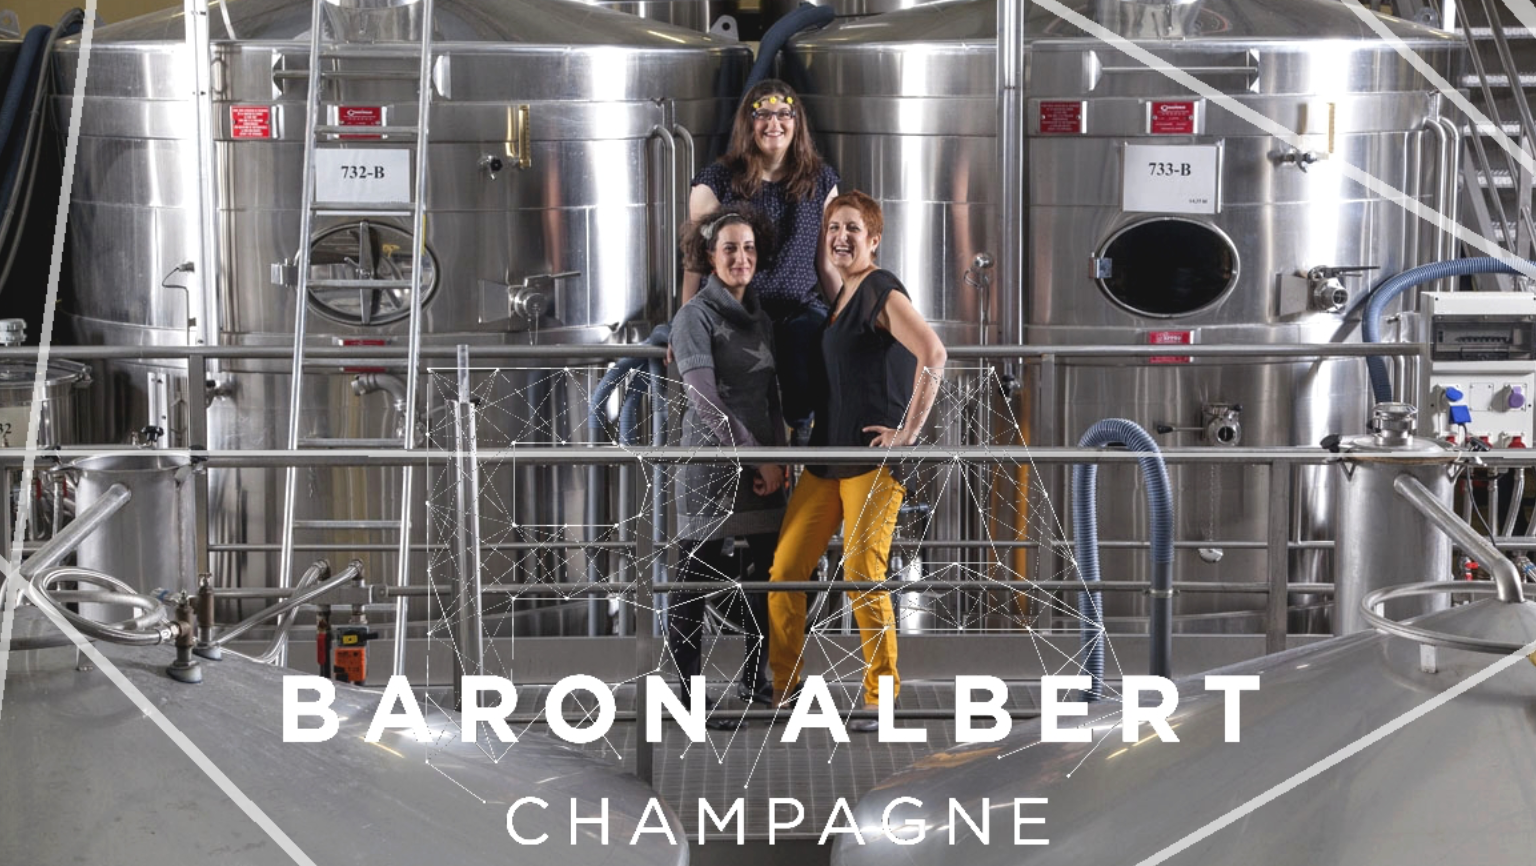 Champagne Baron Albert Champagne